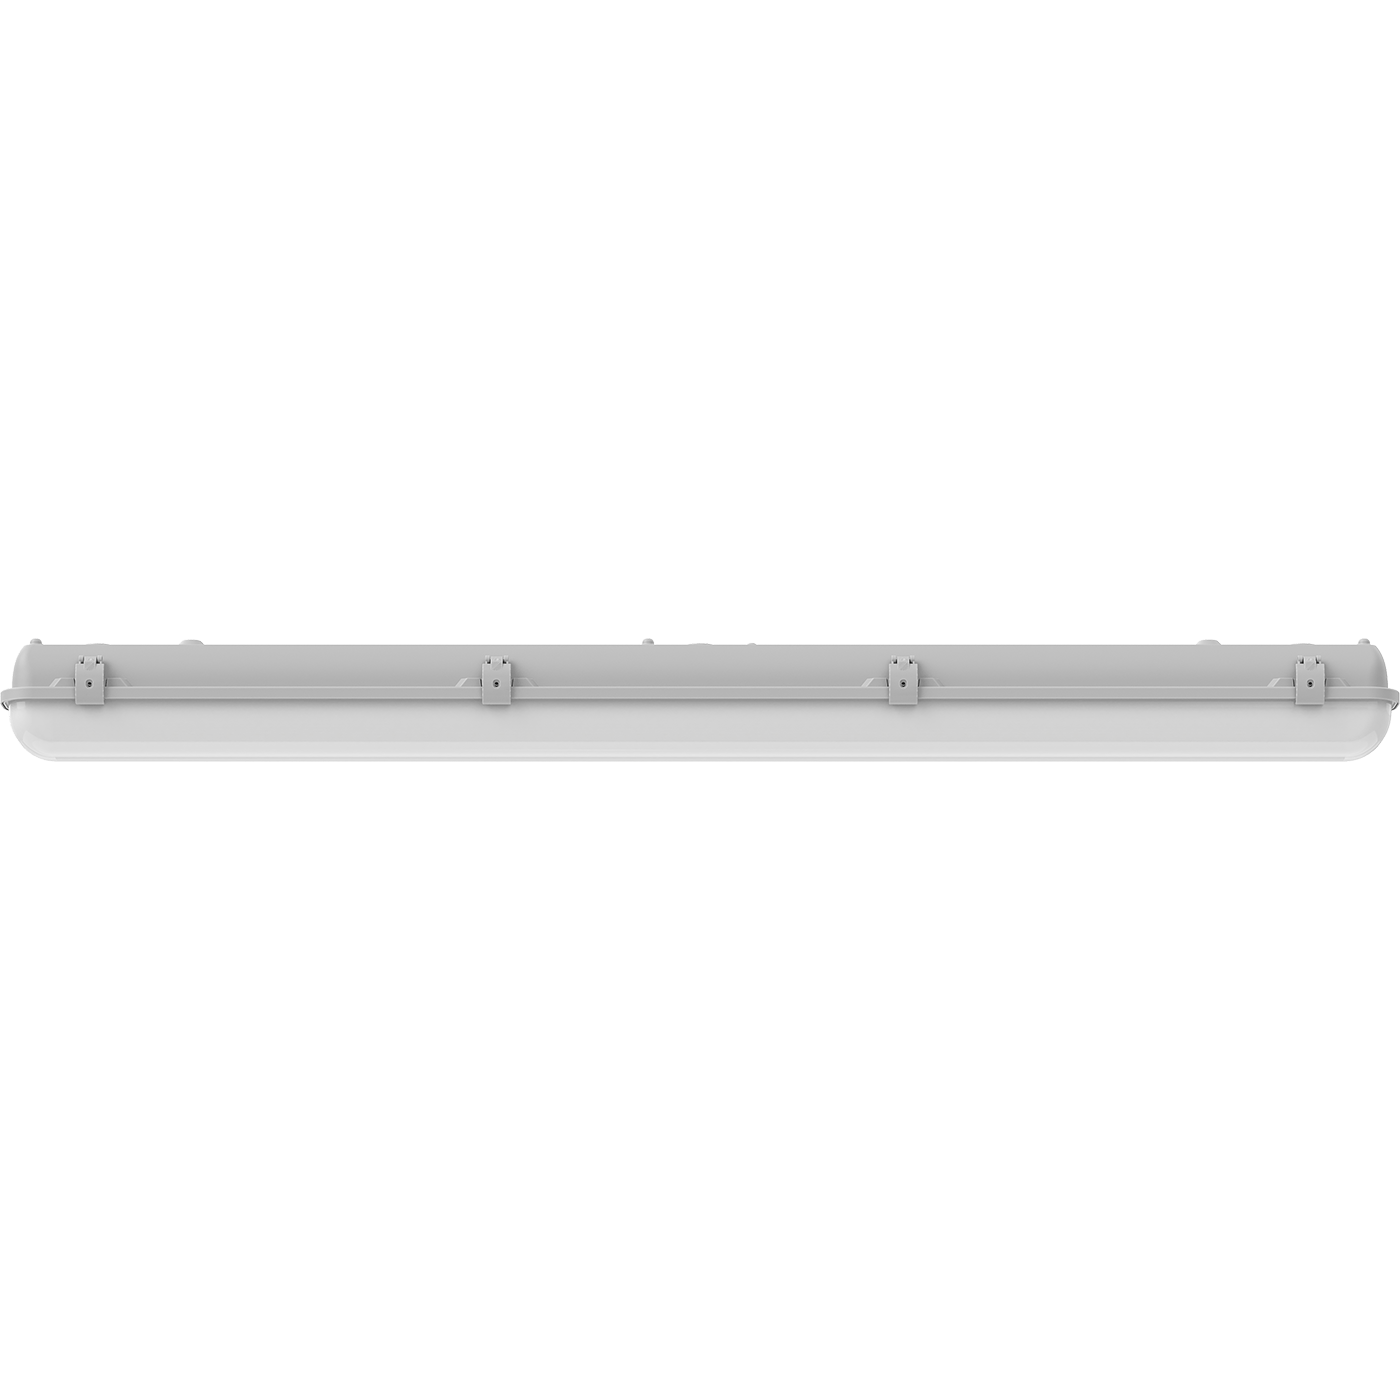 ламповые ARCTIC 128 (SAN/SMC) HF, артикул 1069002050